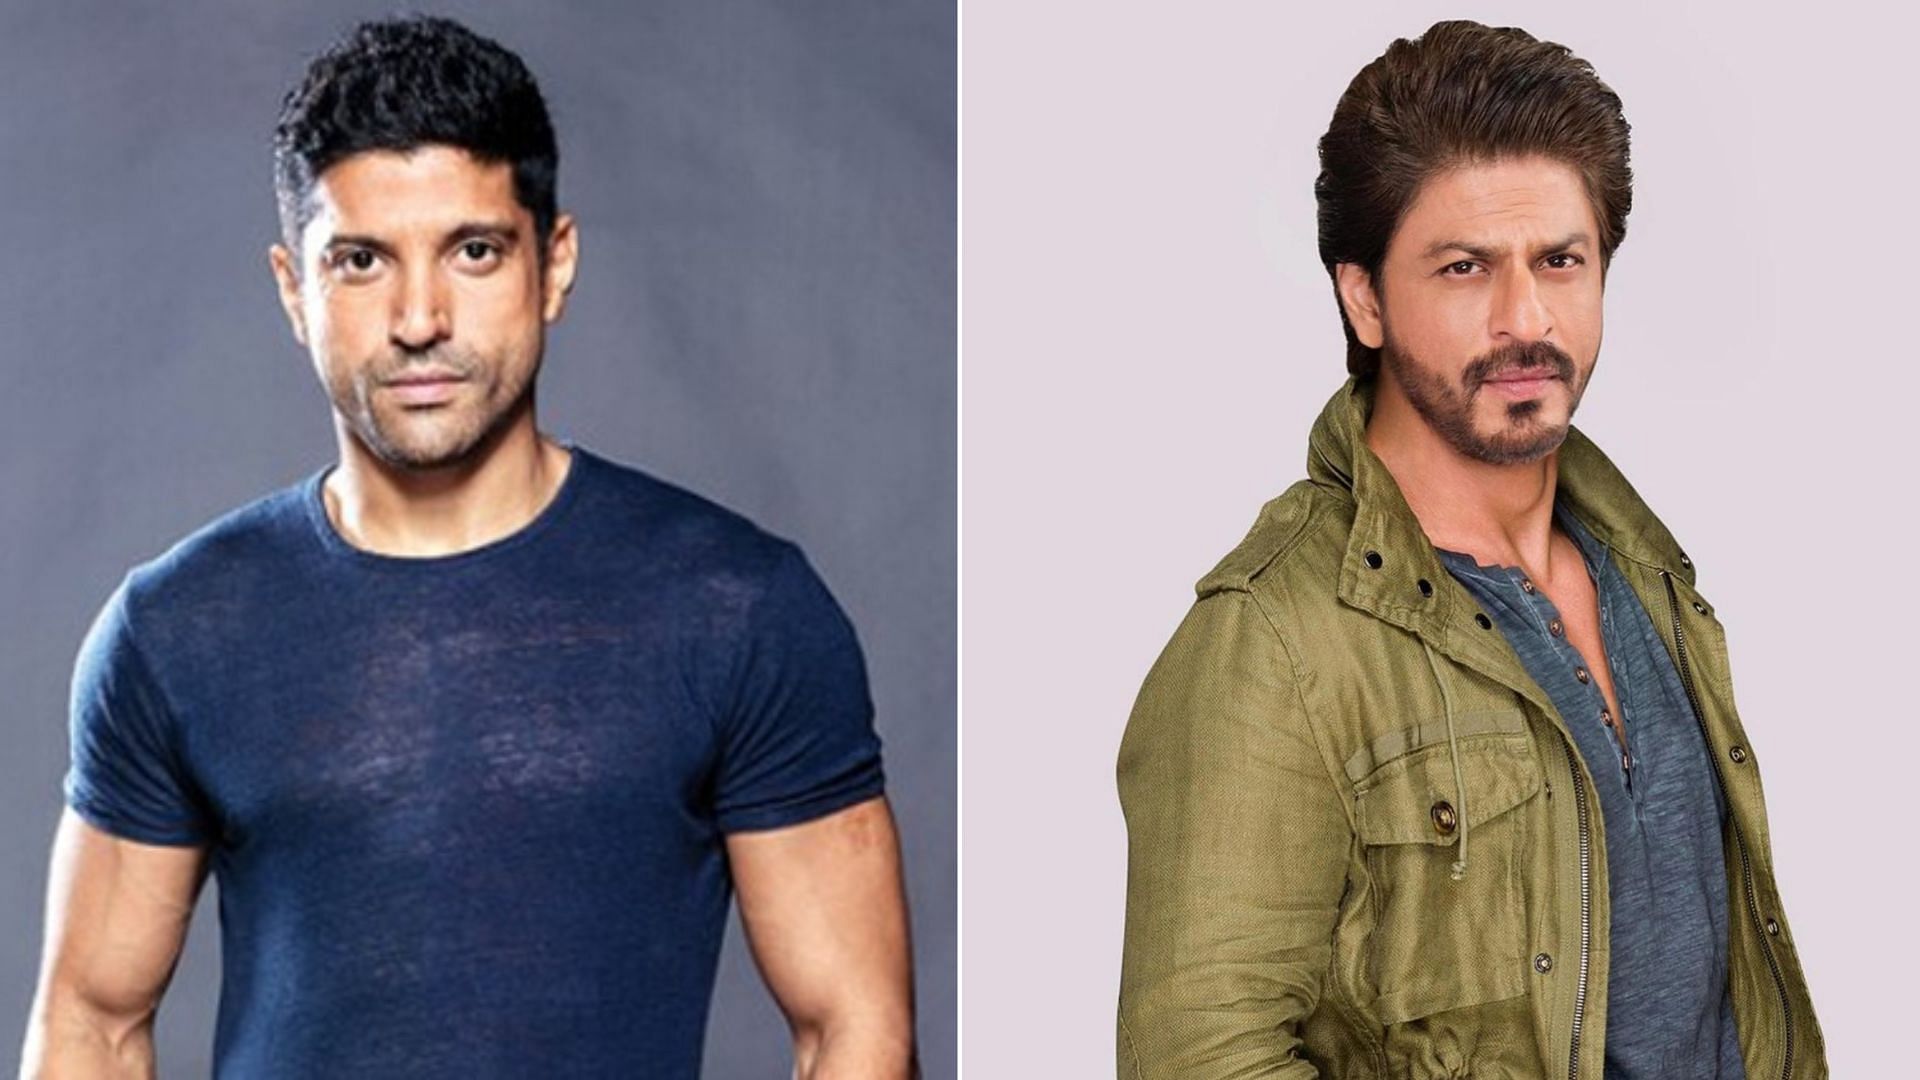 <div class="paragraphs"><p>Farhan Akhtar Announces 'Don 3', Confirms Shah Rukh Khan's Exit From Franchise</p></div>